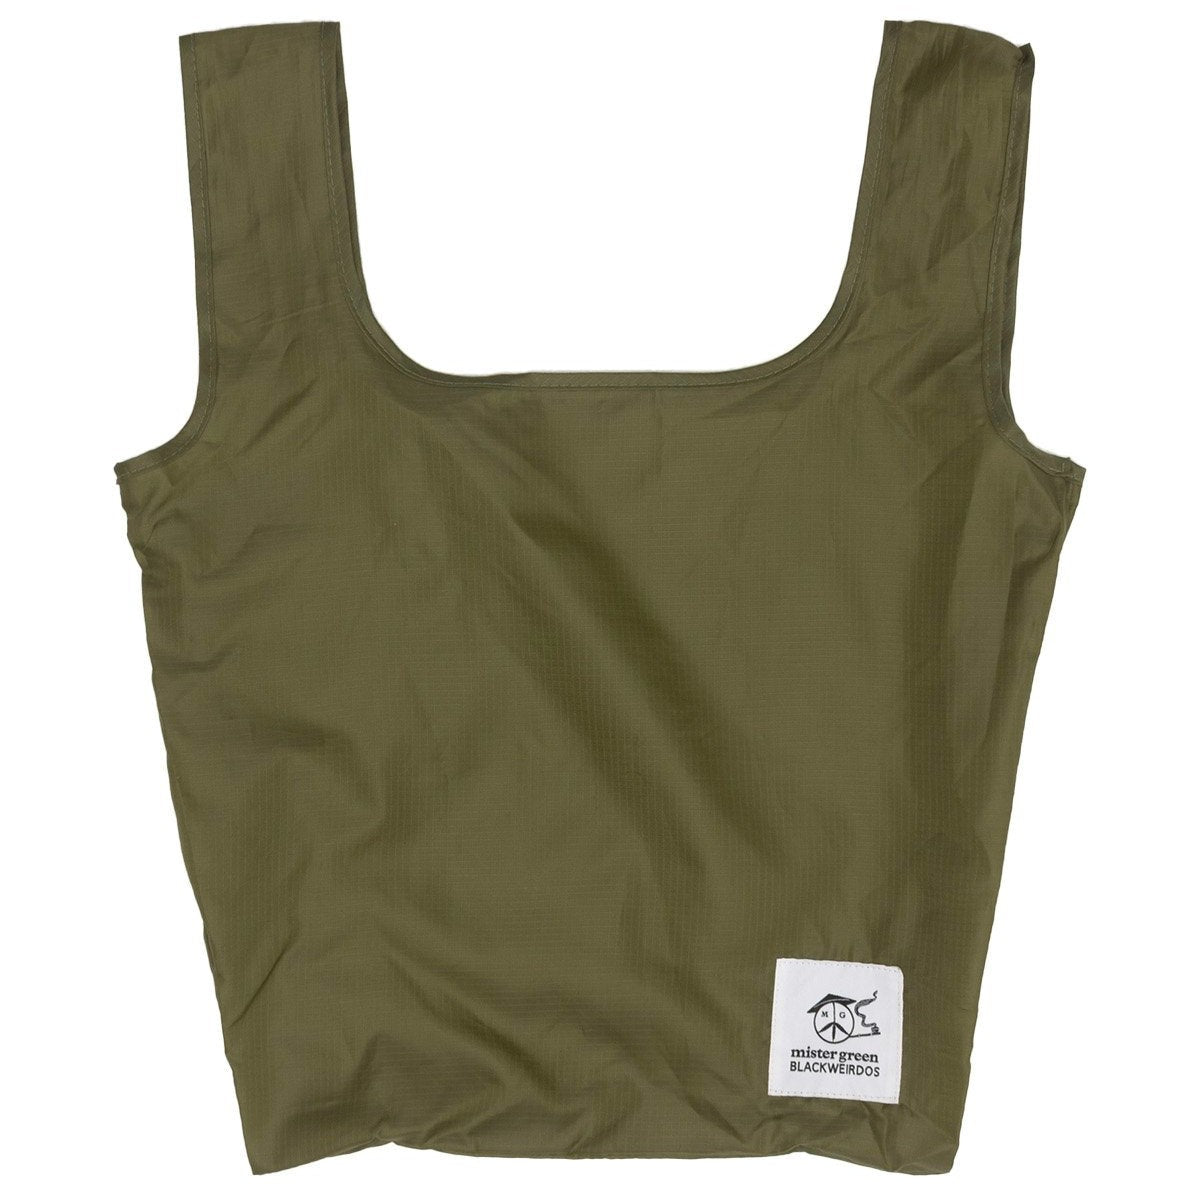 Blackweirdos for Mister Green - Packable Shopping Bag